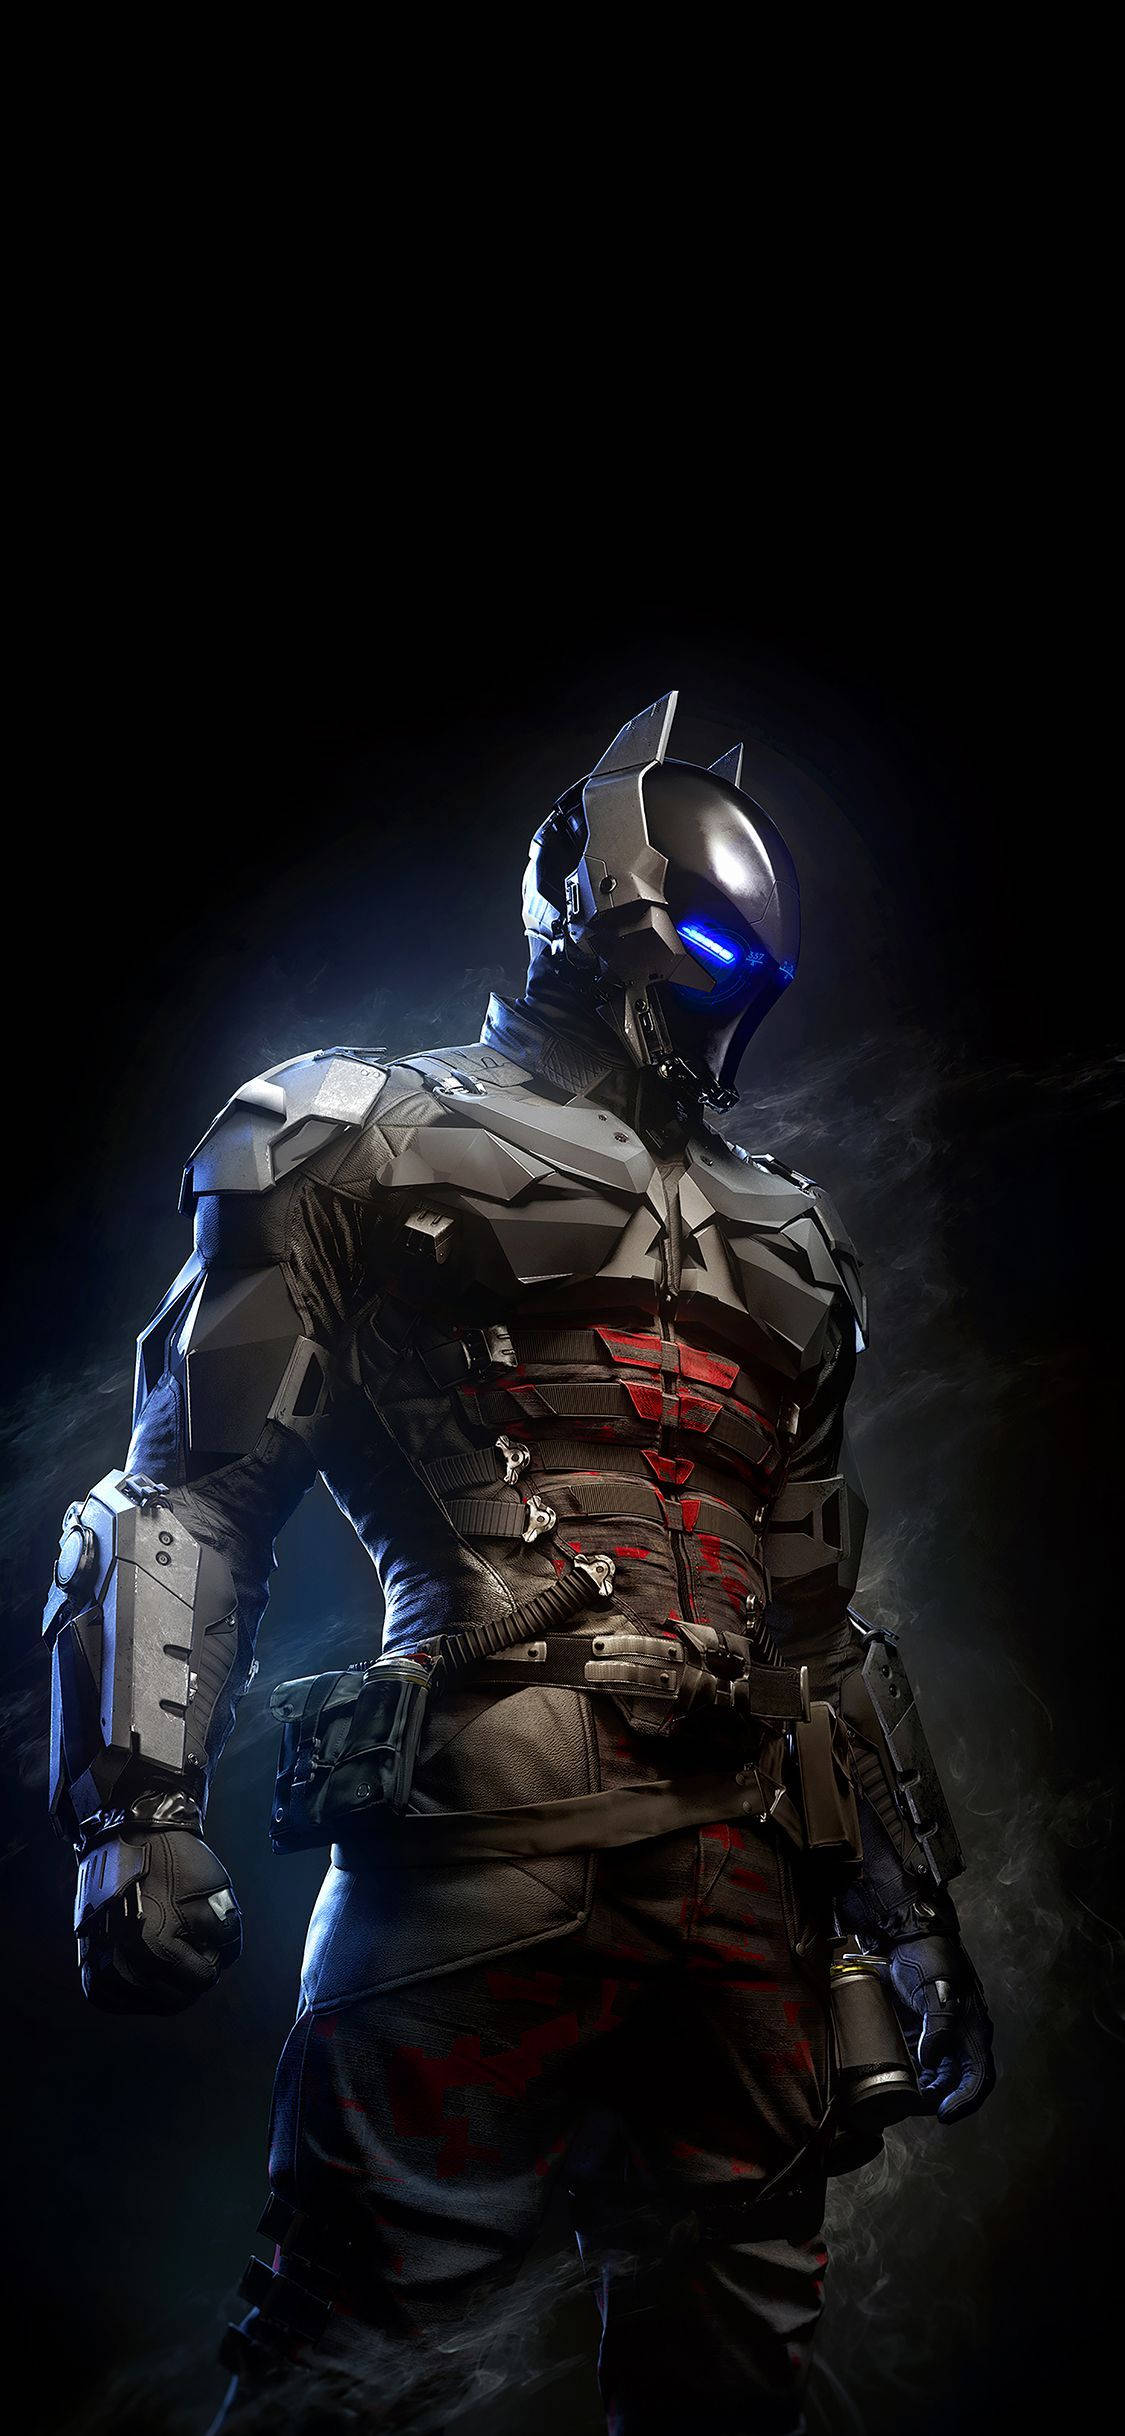 Batman Arkham Knight Futuristic Suit Iphone X Wallpaper